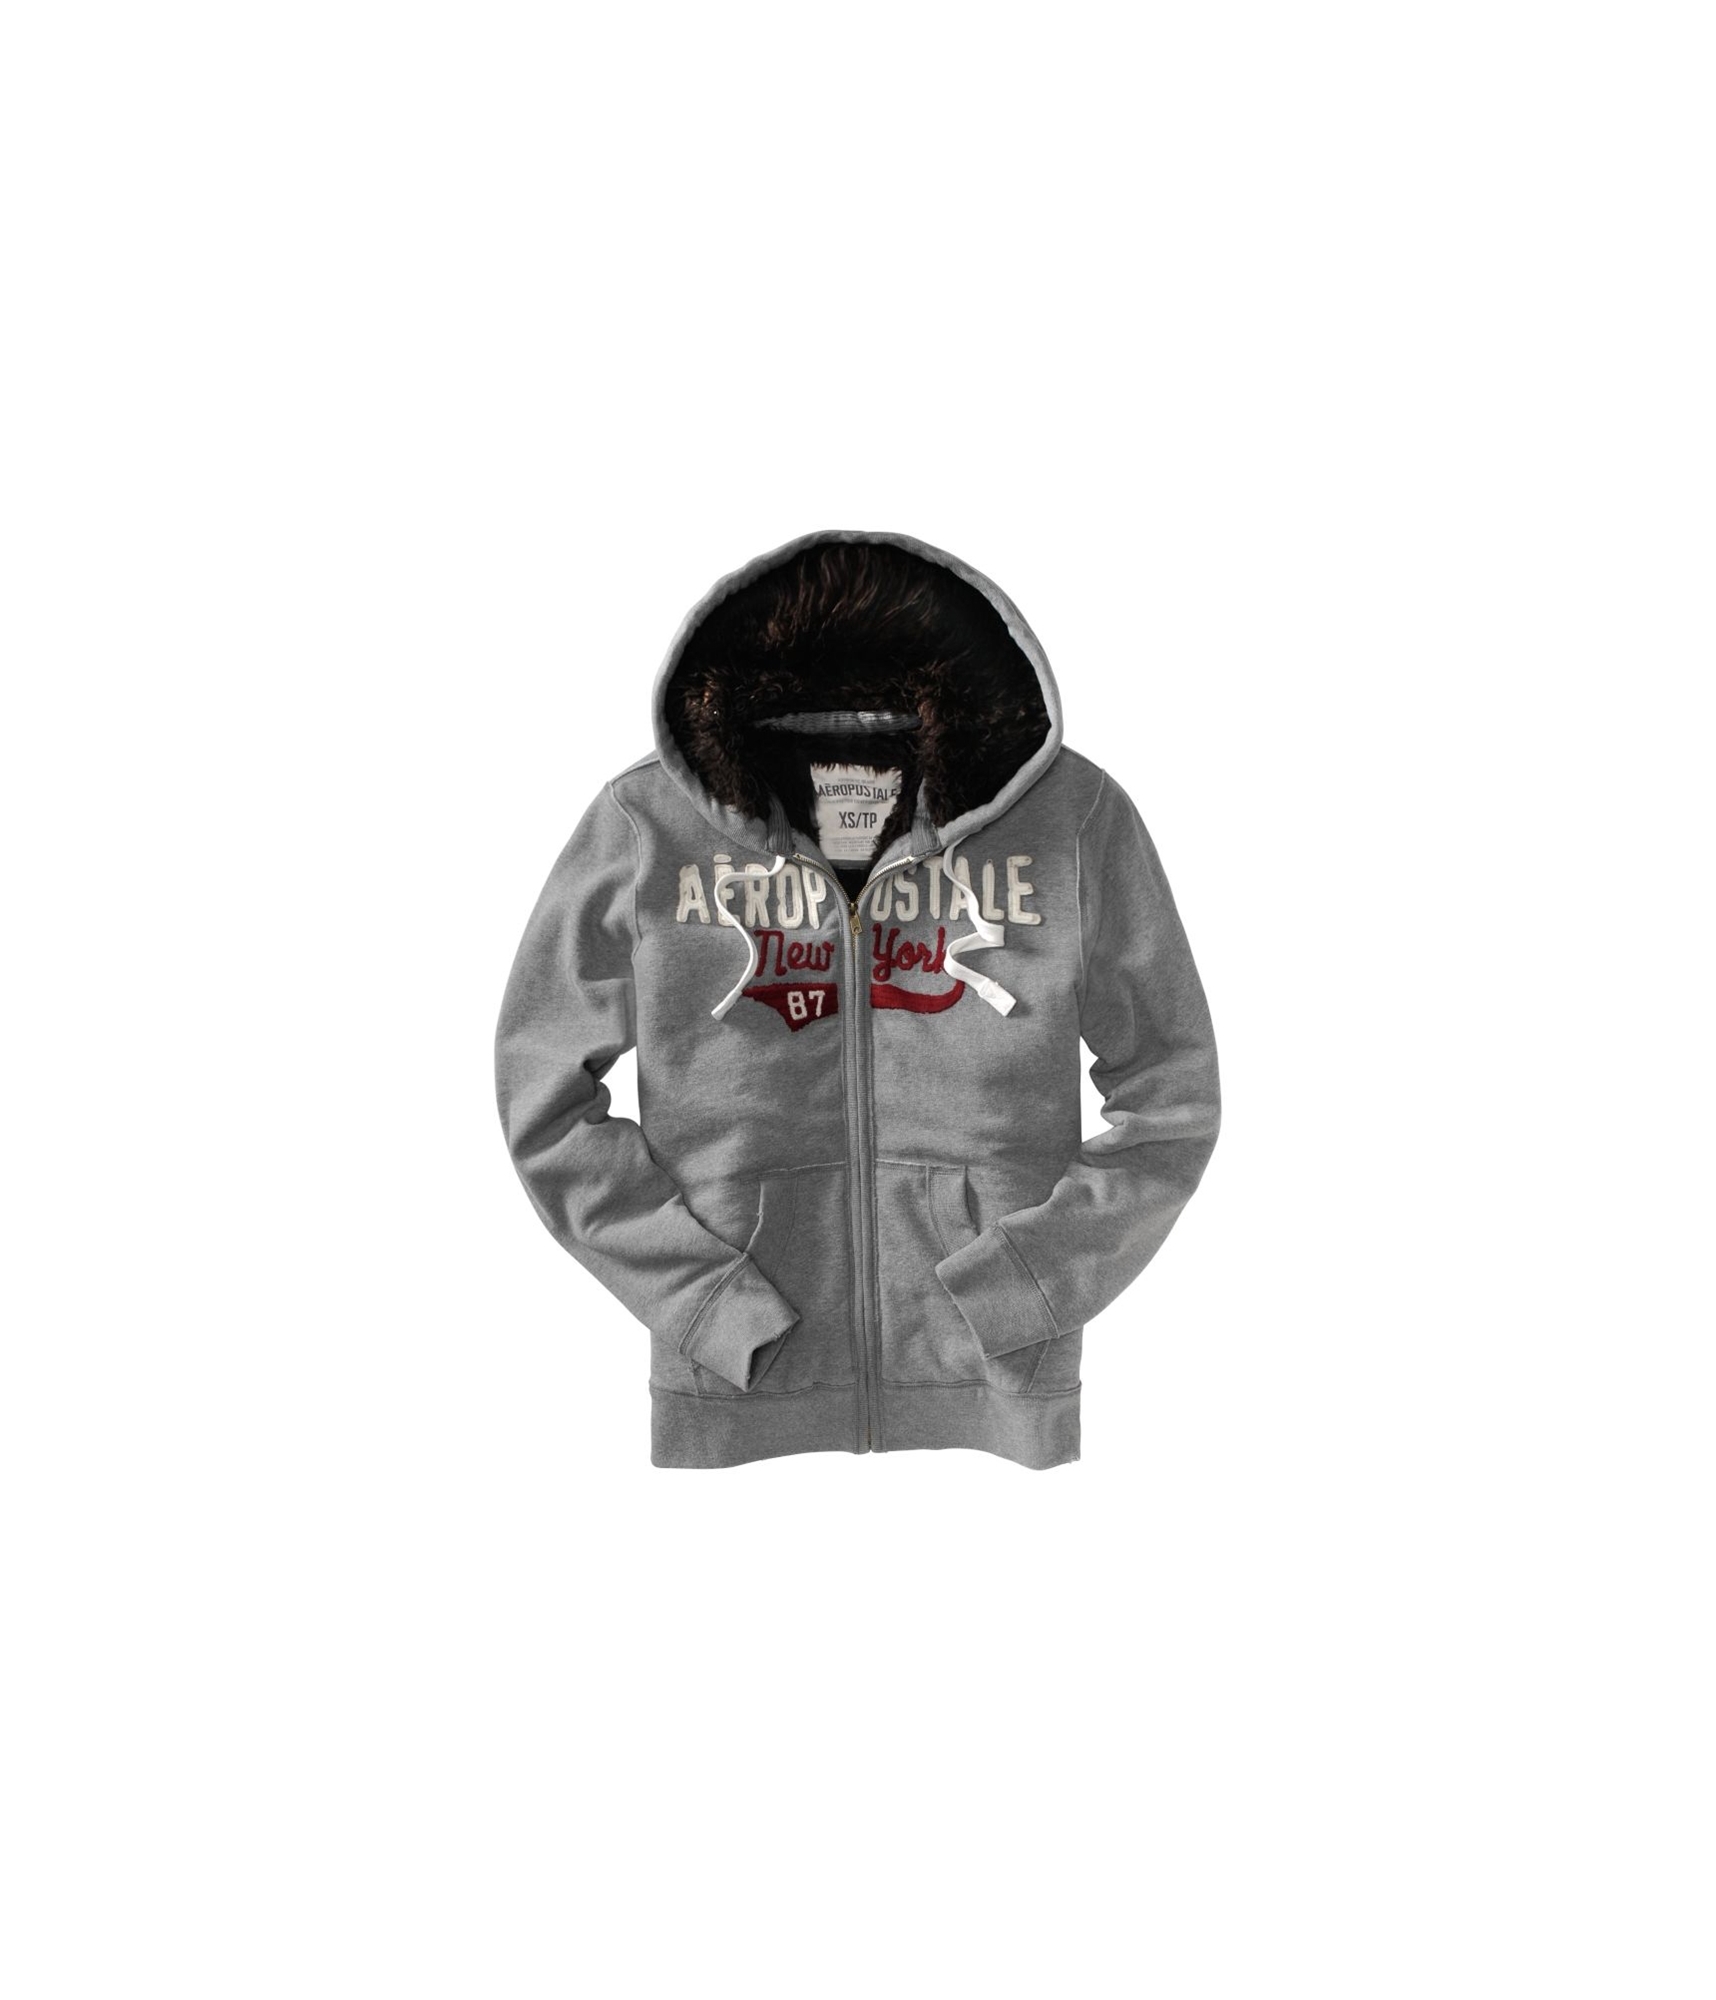 Aeropostale Men's Fleece Lined Jacket Small | Line jackets, Aeropostale men,  Clothes design